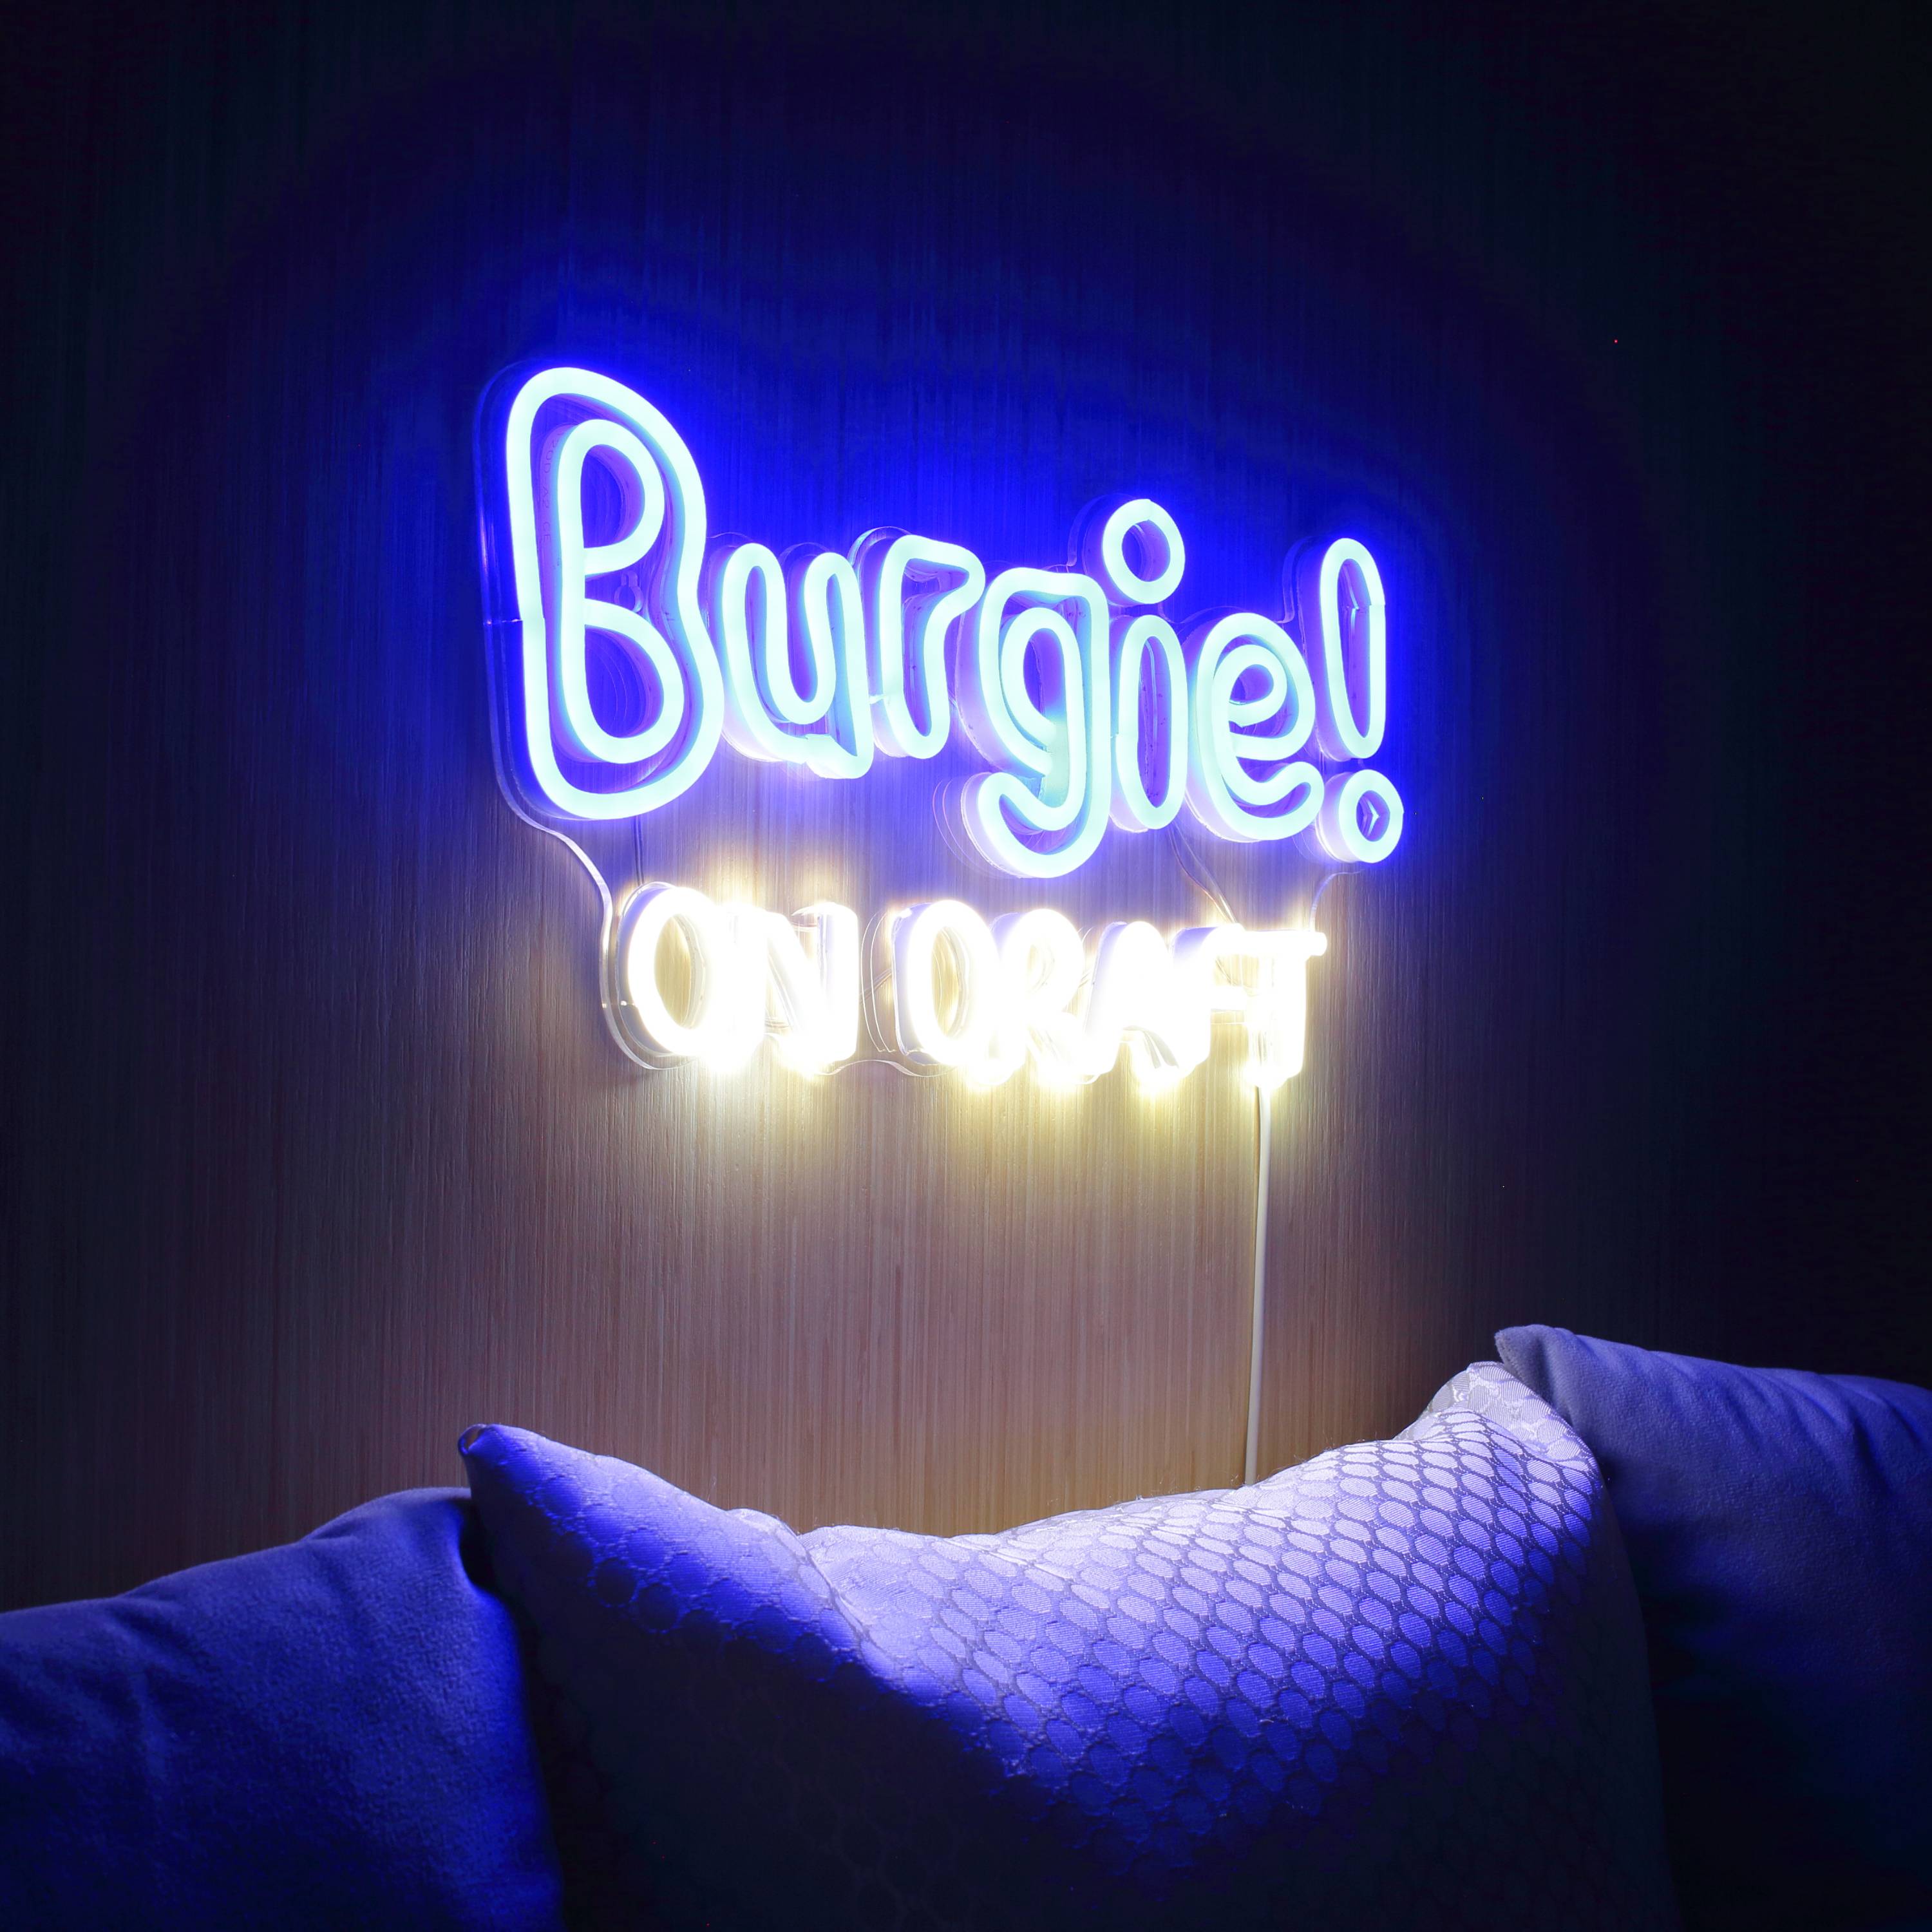 Burgie! On Draft Large Flex Neon LED Sign